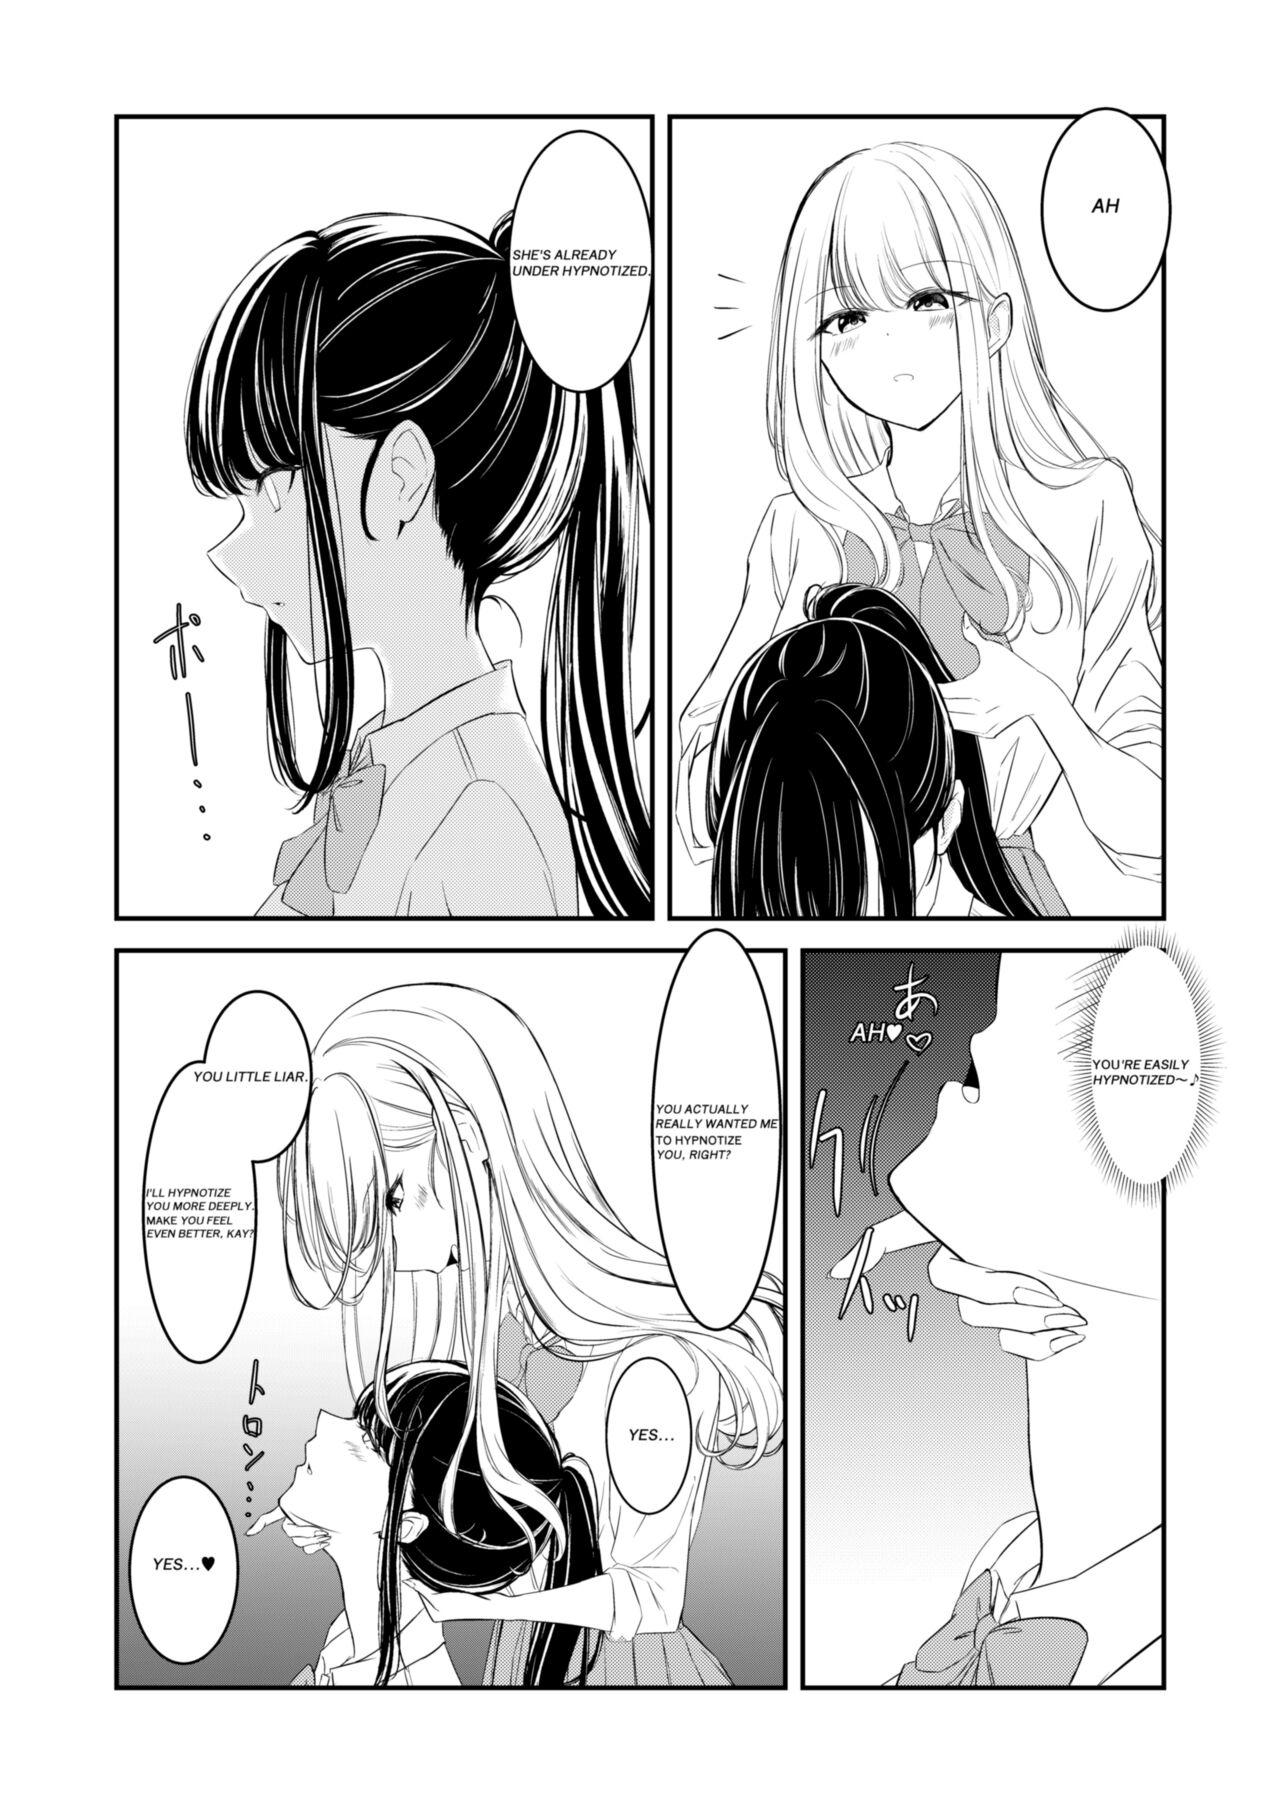 Yuri comic Part 1 and 2. 10